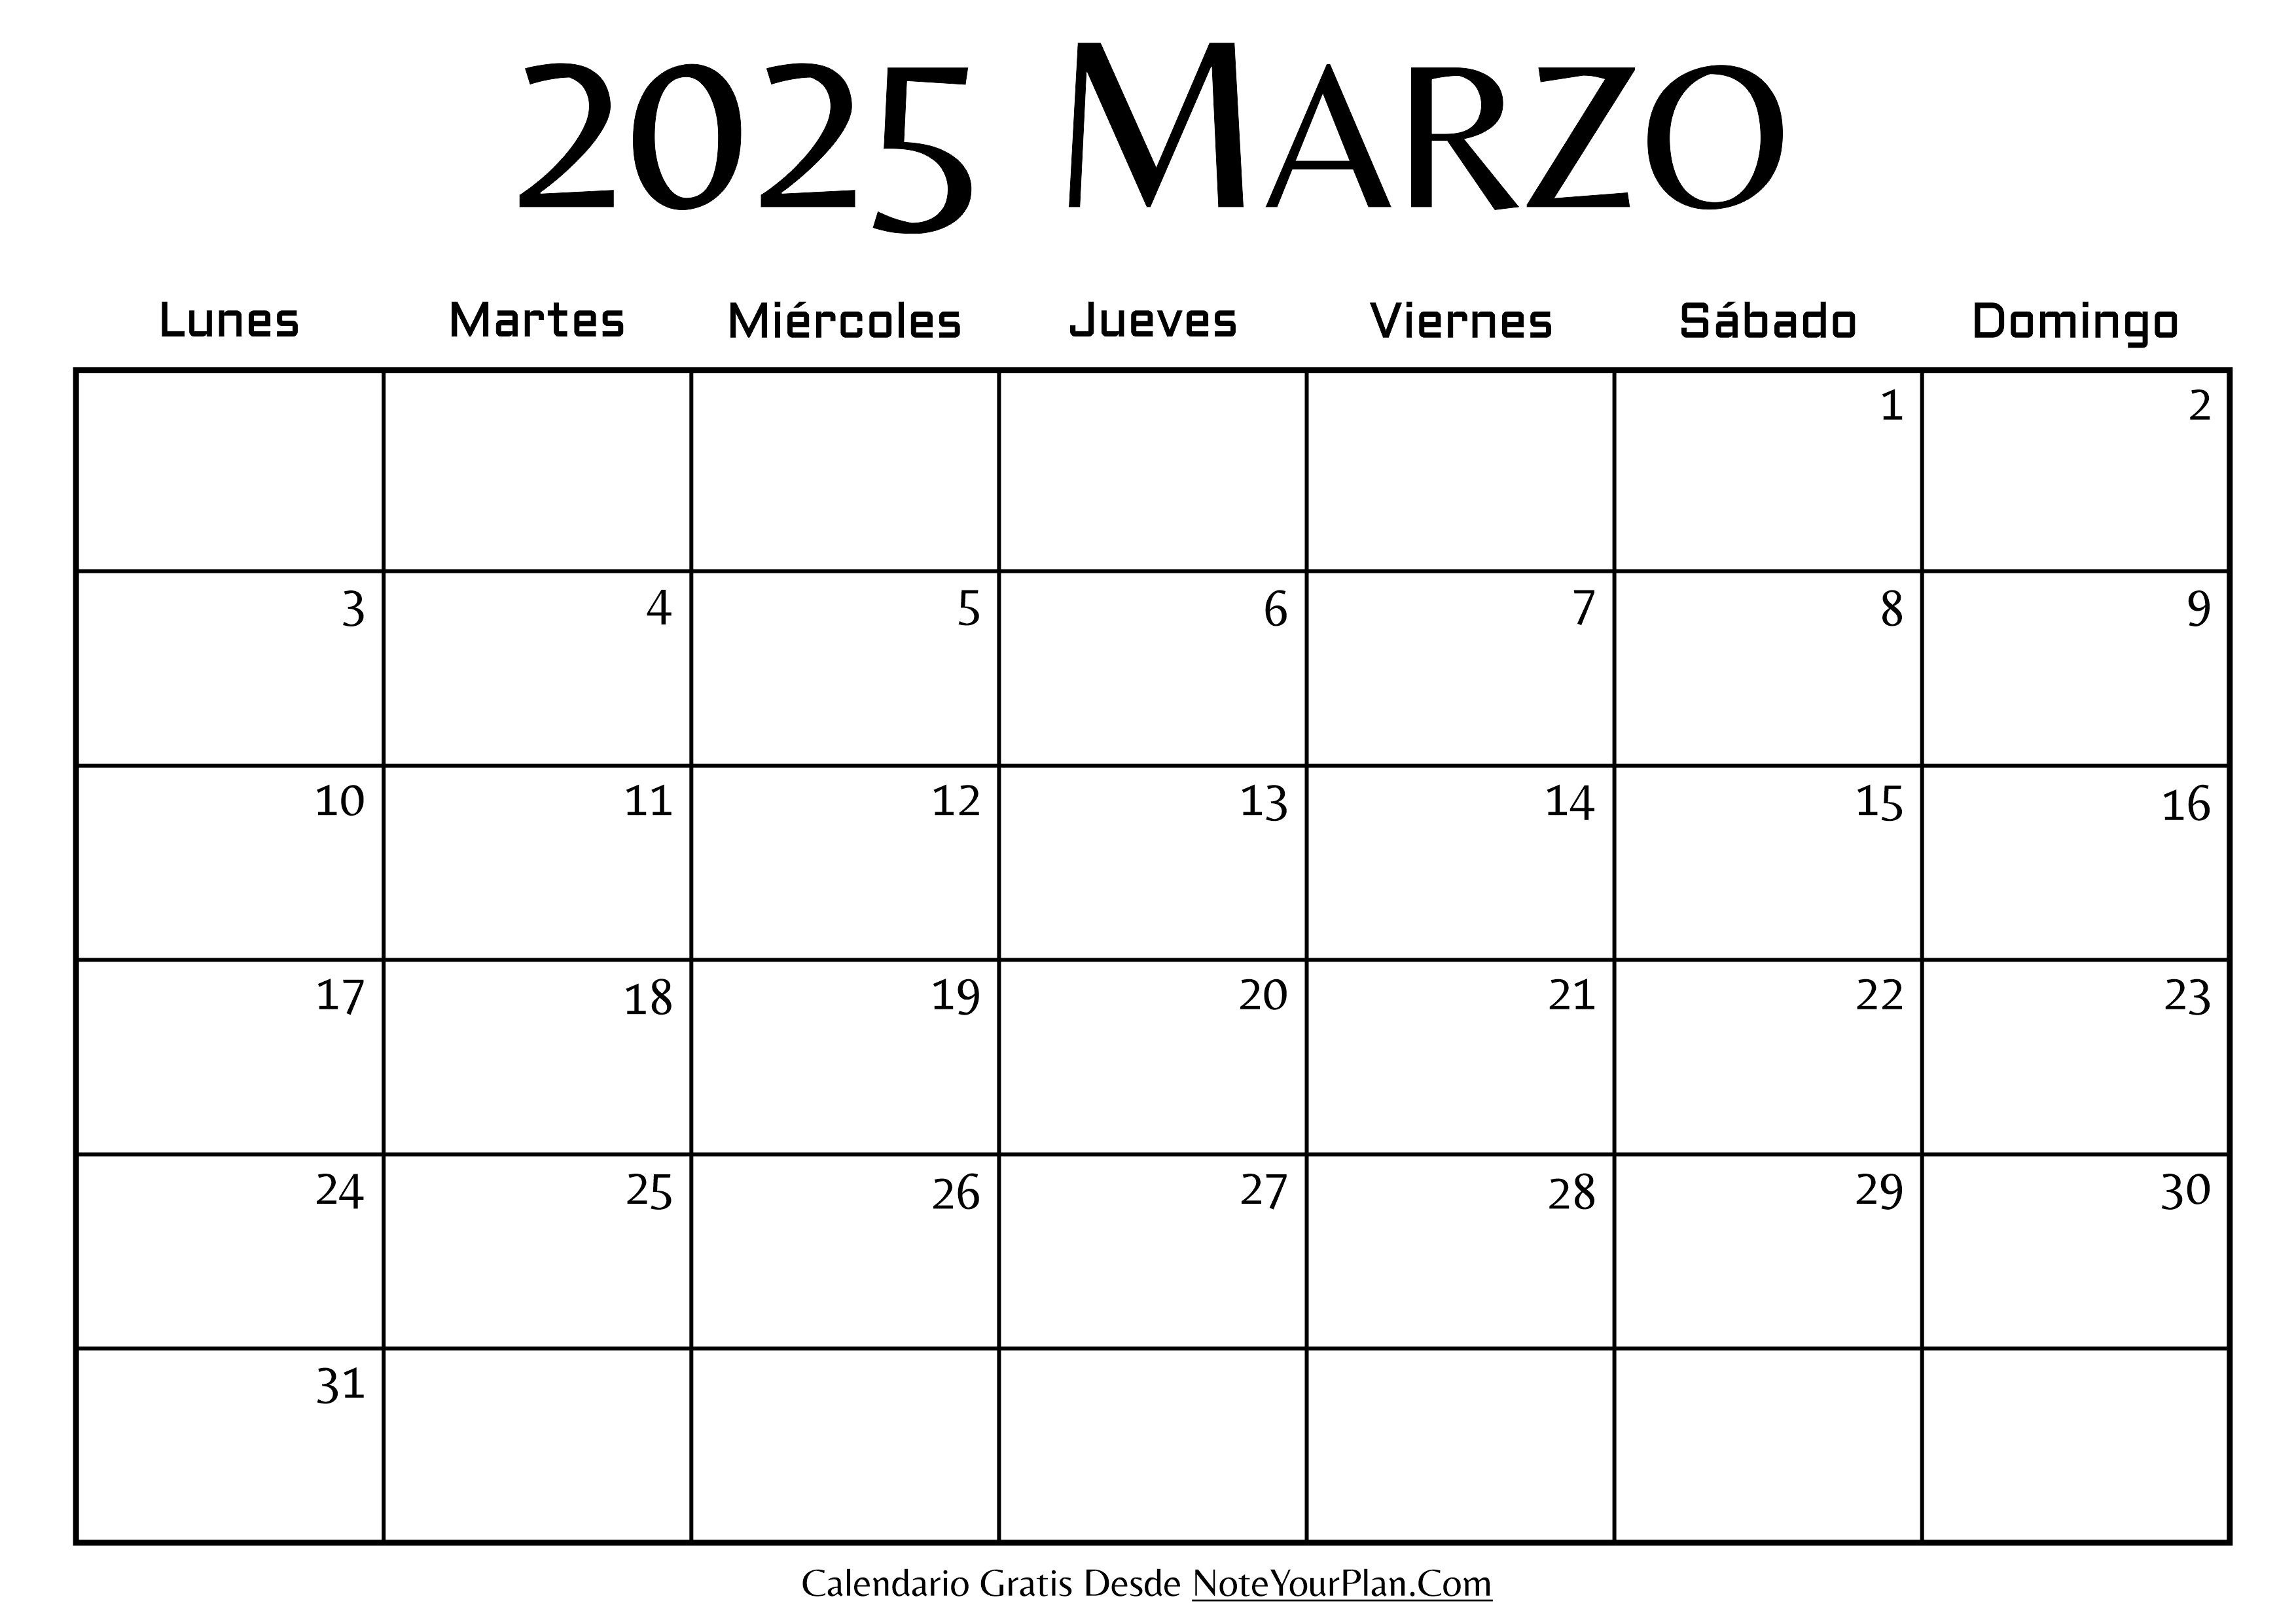 Calendario en blanco de Marzo